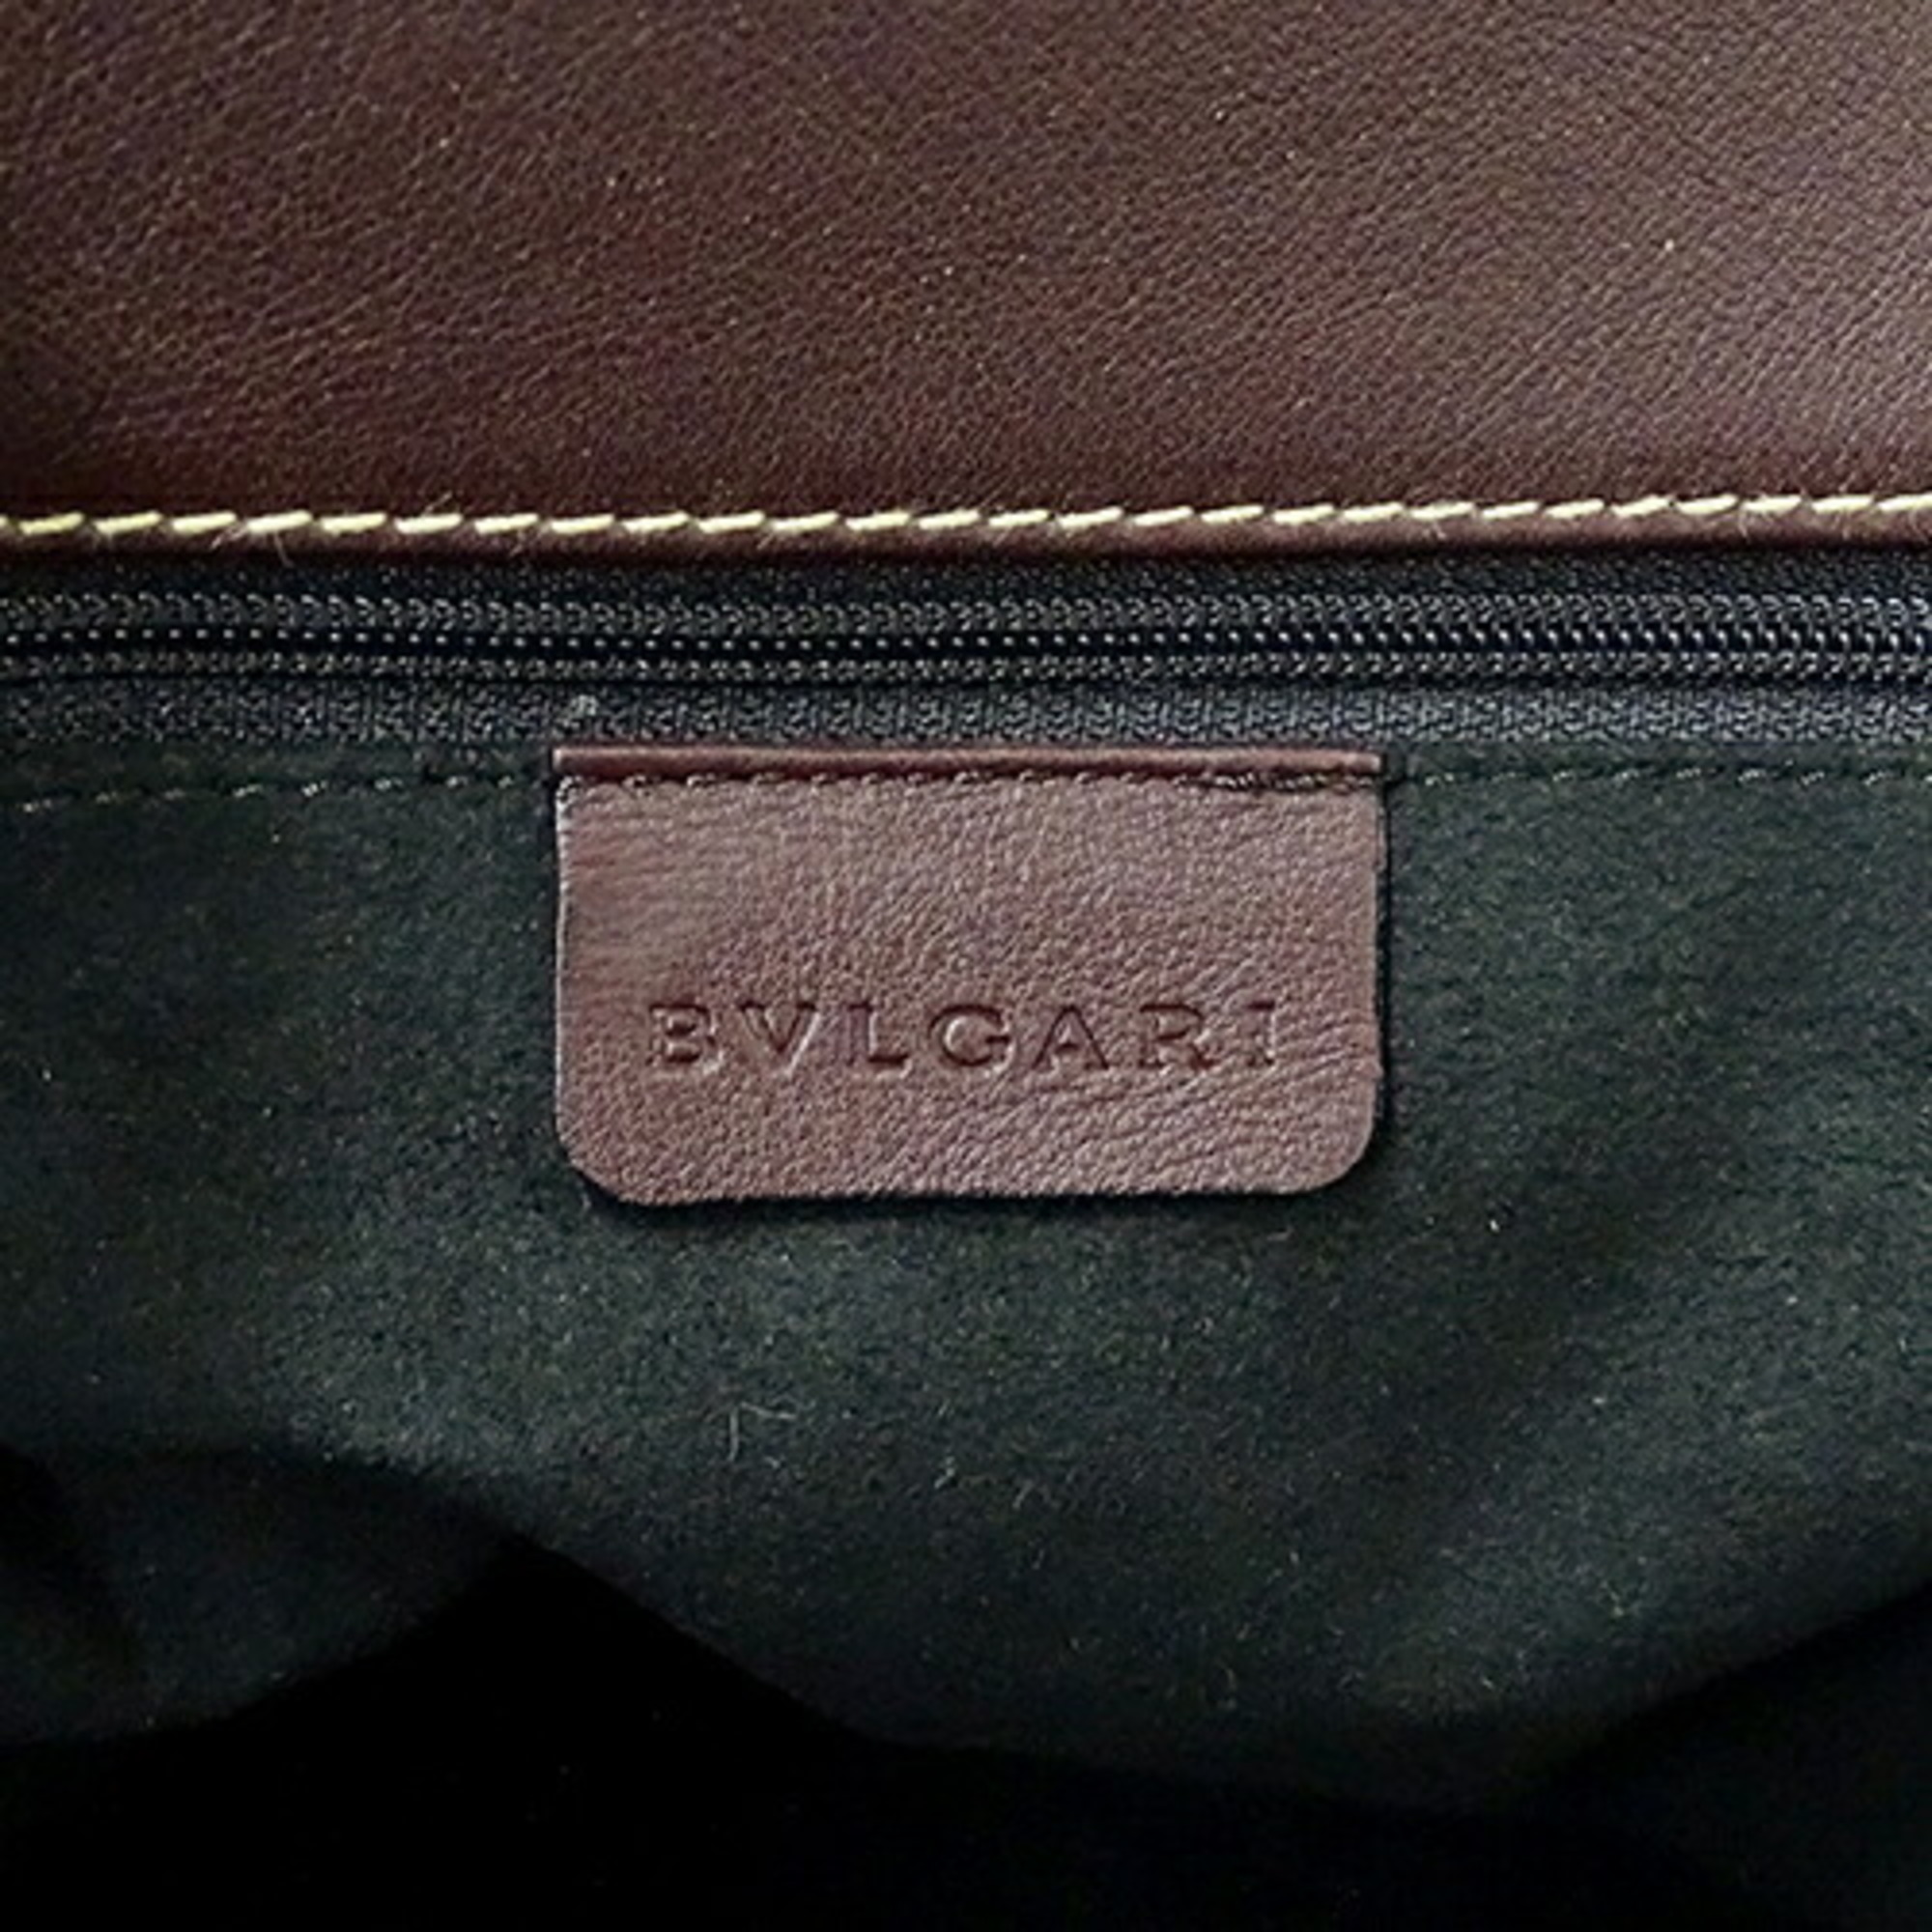 Bvlgari BVLGARI Bag Women's Men's Brand Tote Boston Leather Brown Purple